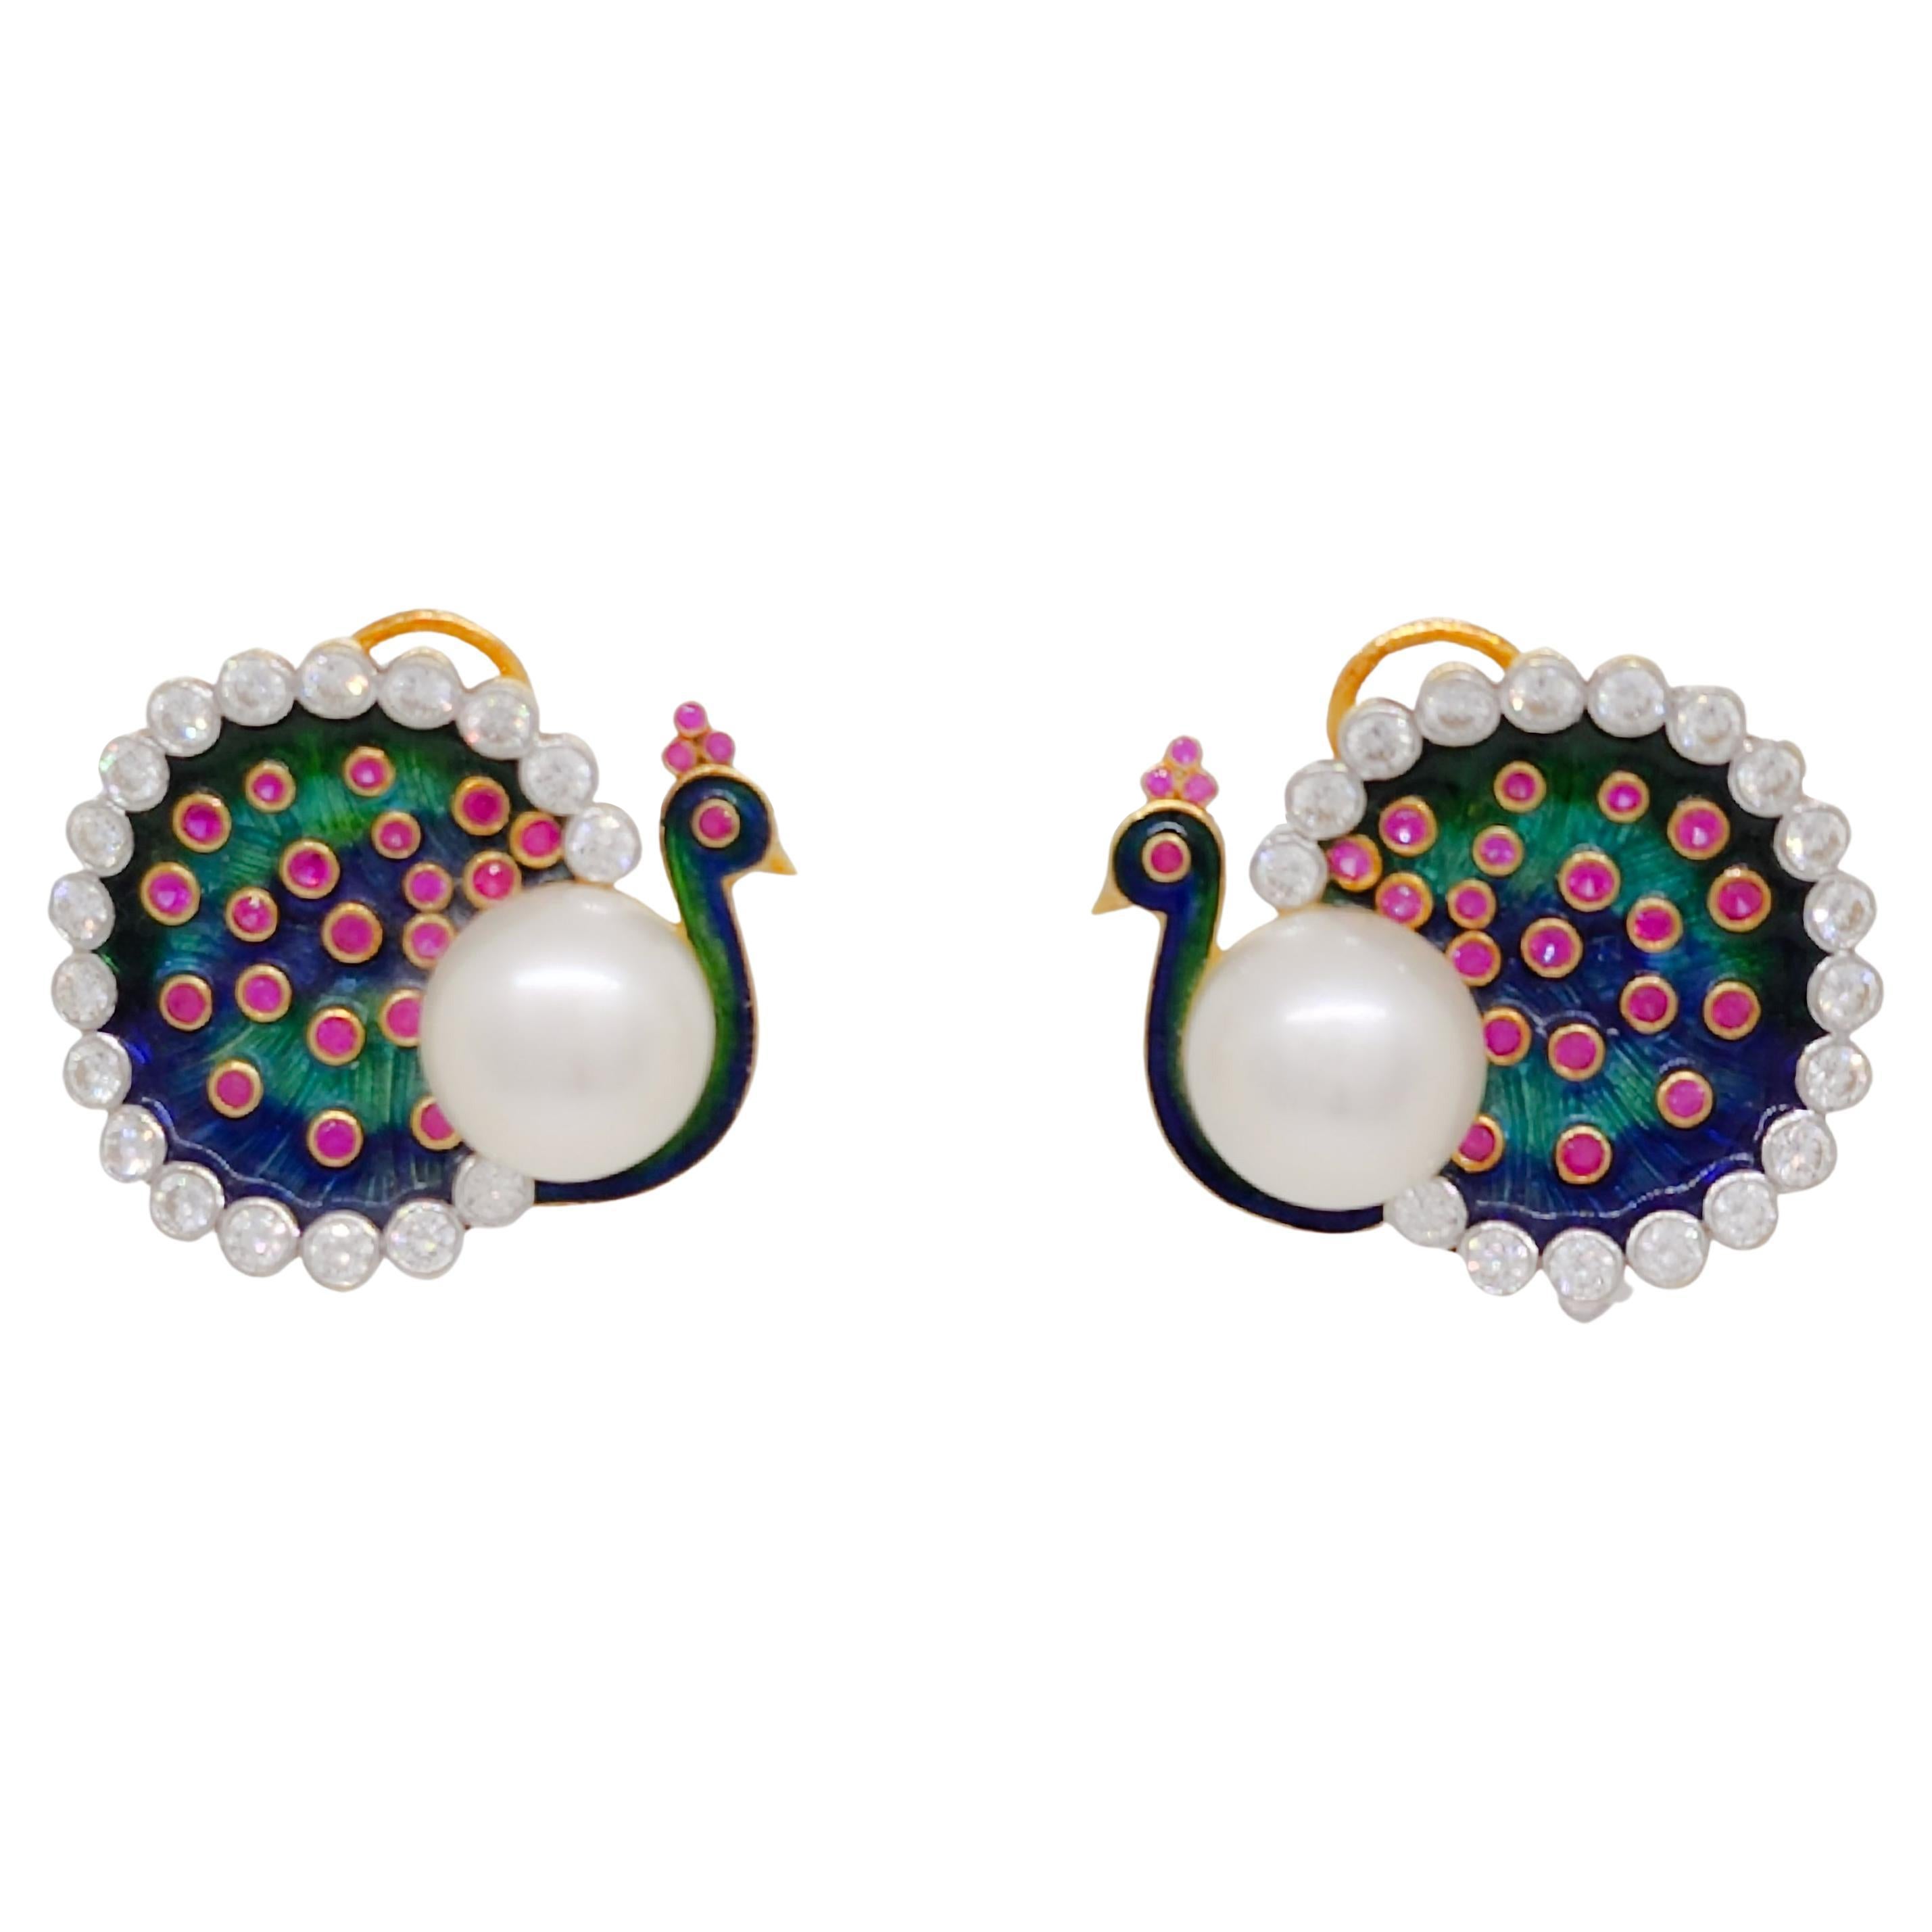 White Diamond, South Sea Pearl, and Enamel Peacock Earrings in 18k For Sale